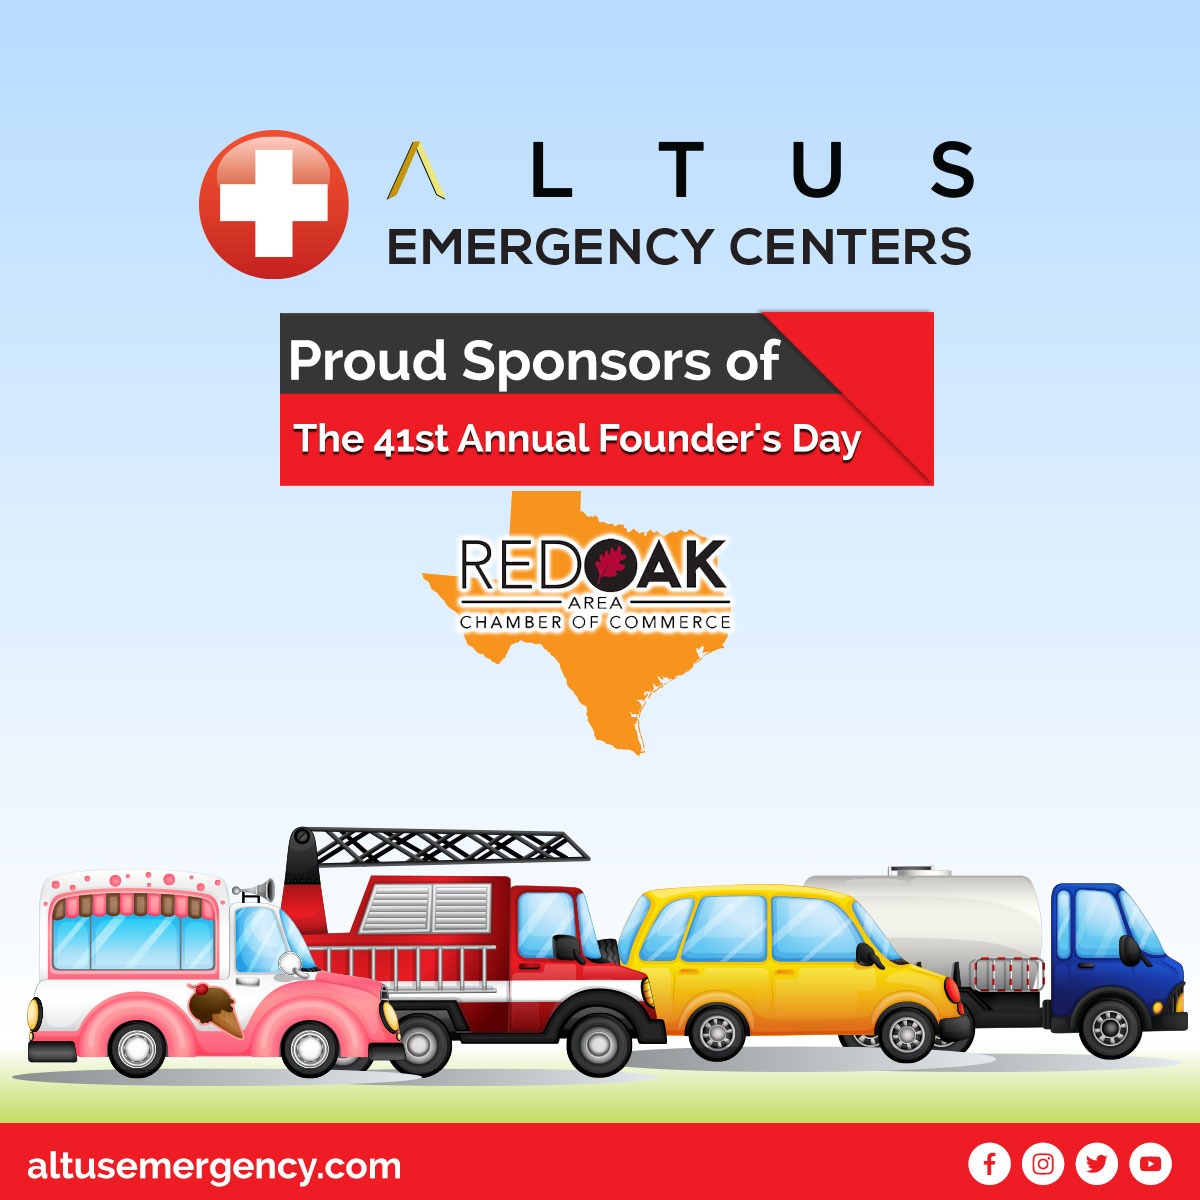 Altus Emergency Centers Sponsor Red Oak event